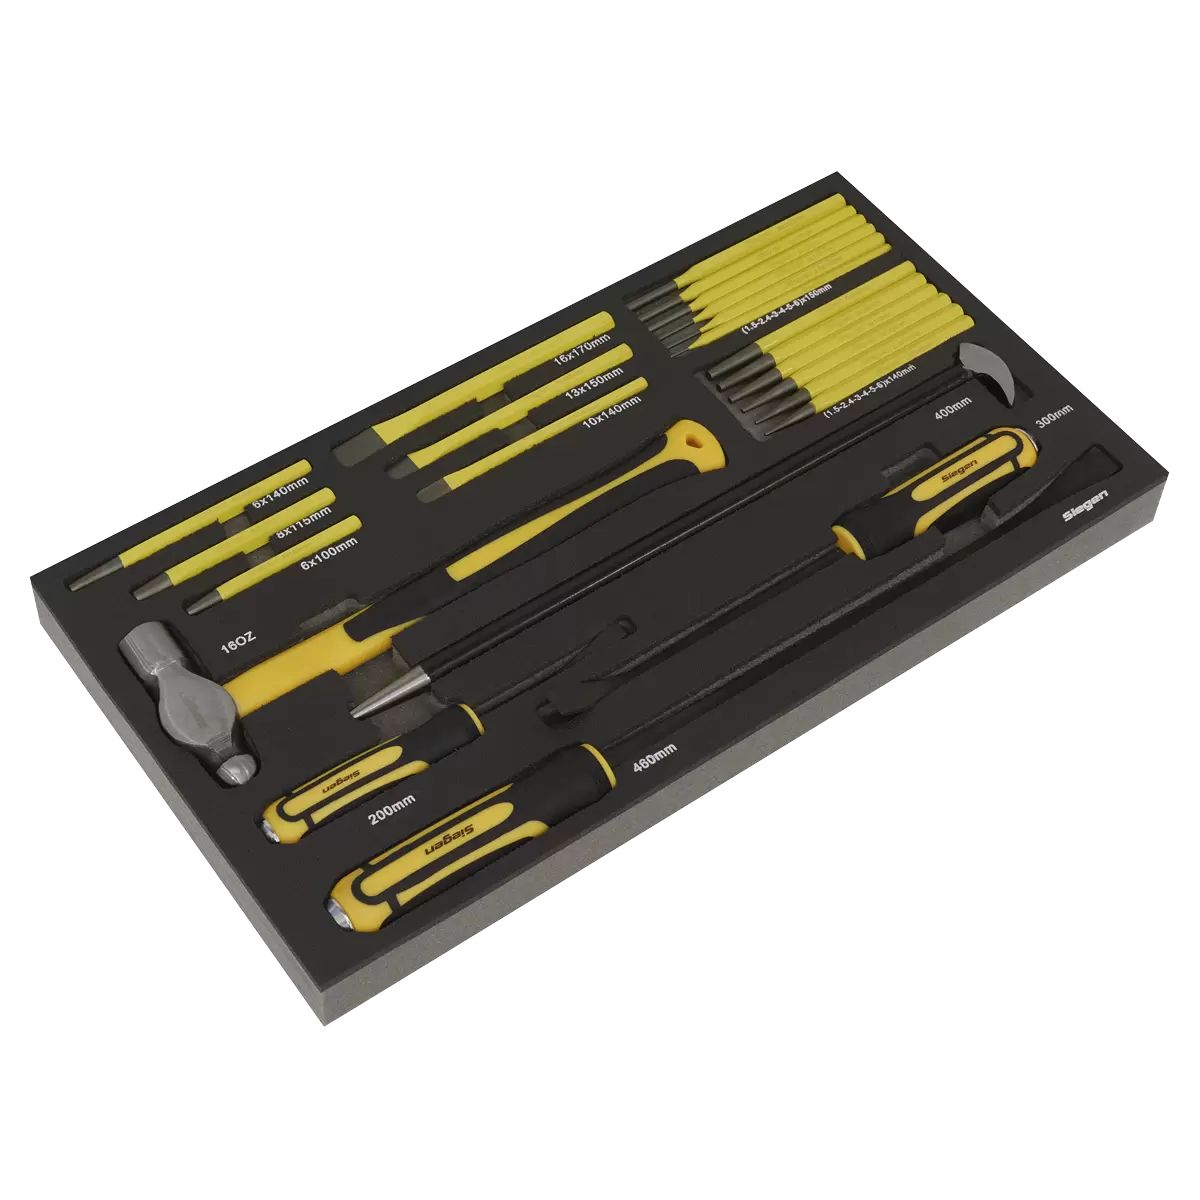 Sealey AP35TBCOMBO Tool Chest Combo 16 Drawer Black/Grey 468pc Tool Kit